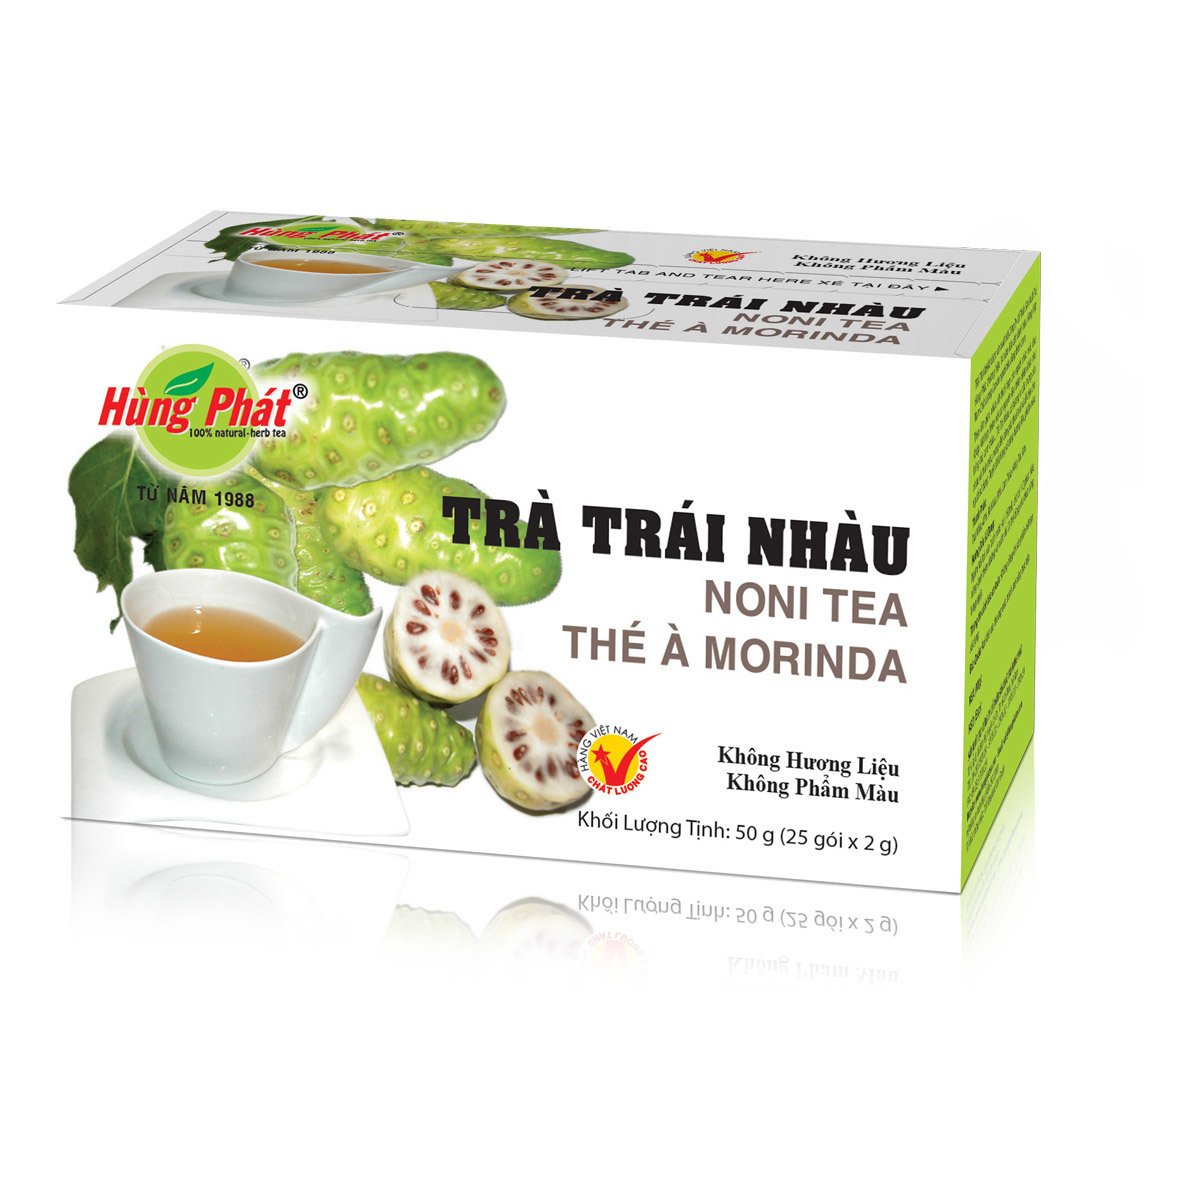 Noni Tea Hung Phat Tea Corporation